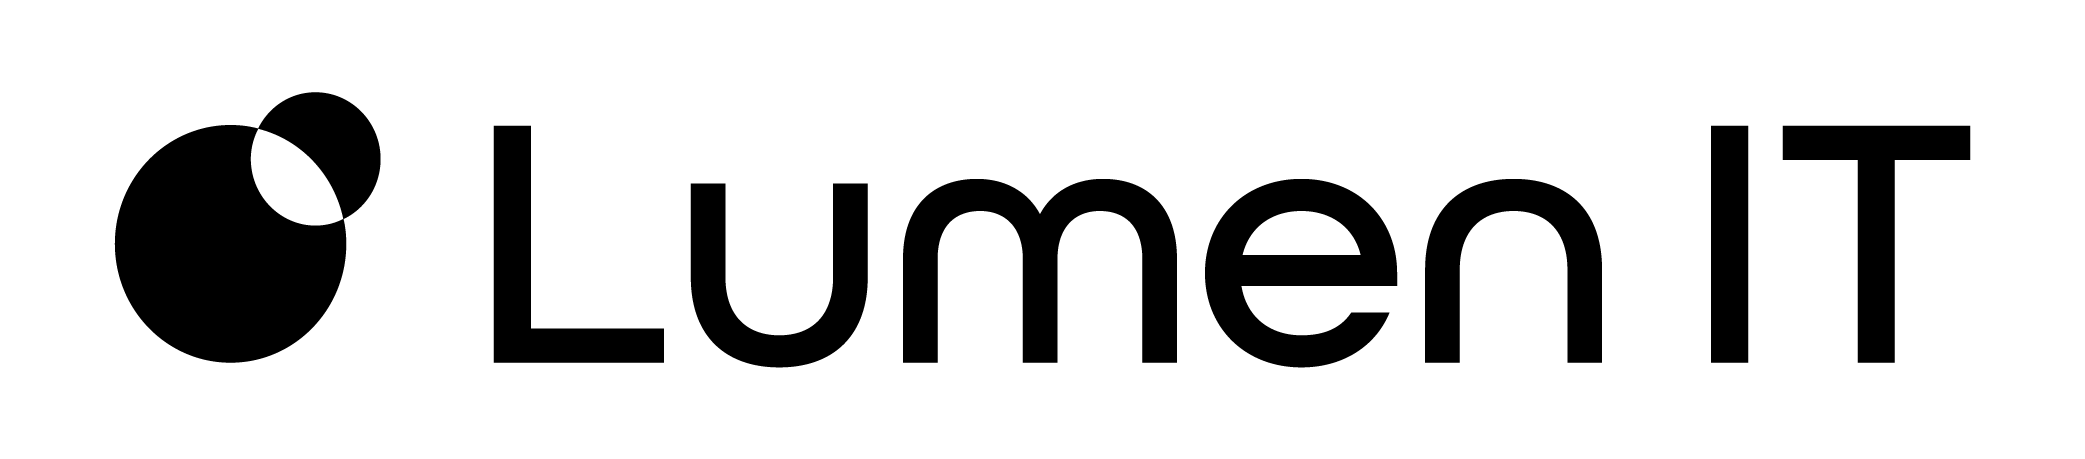 Lumen IT - Logo + Wordmark - black.png